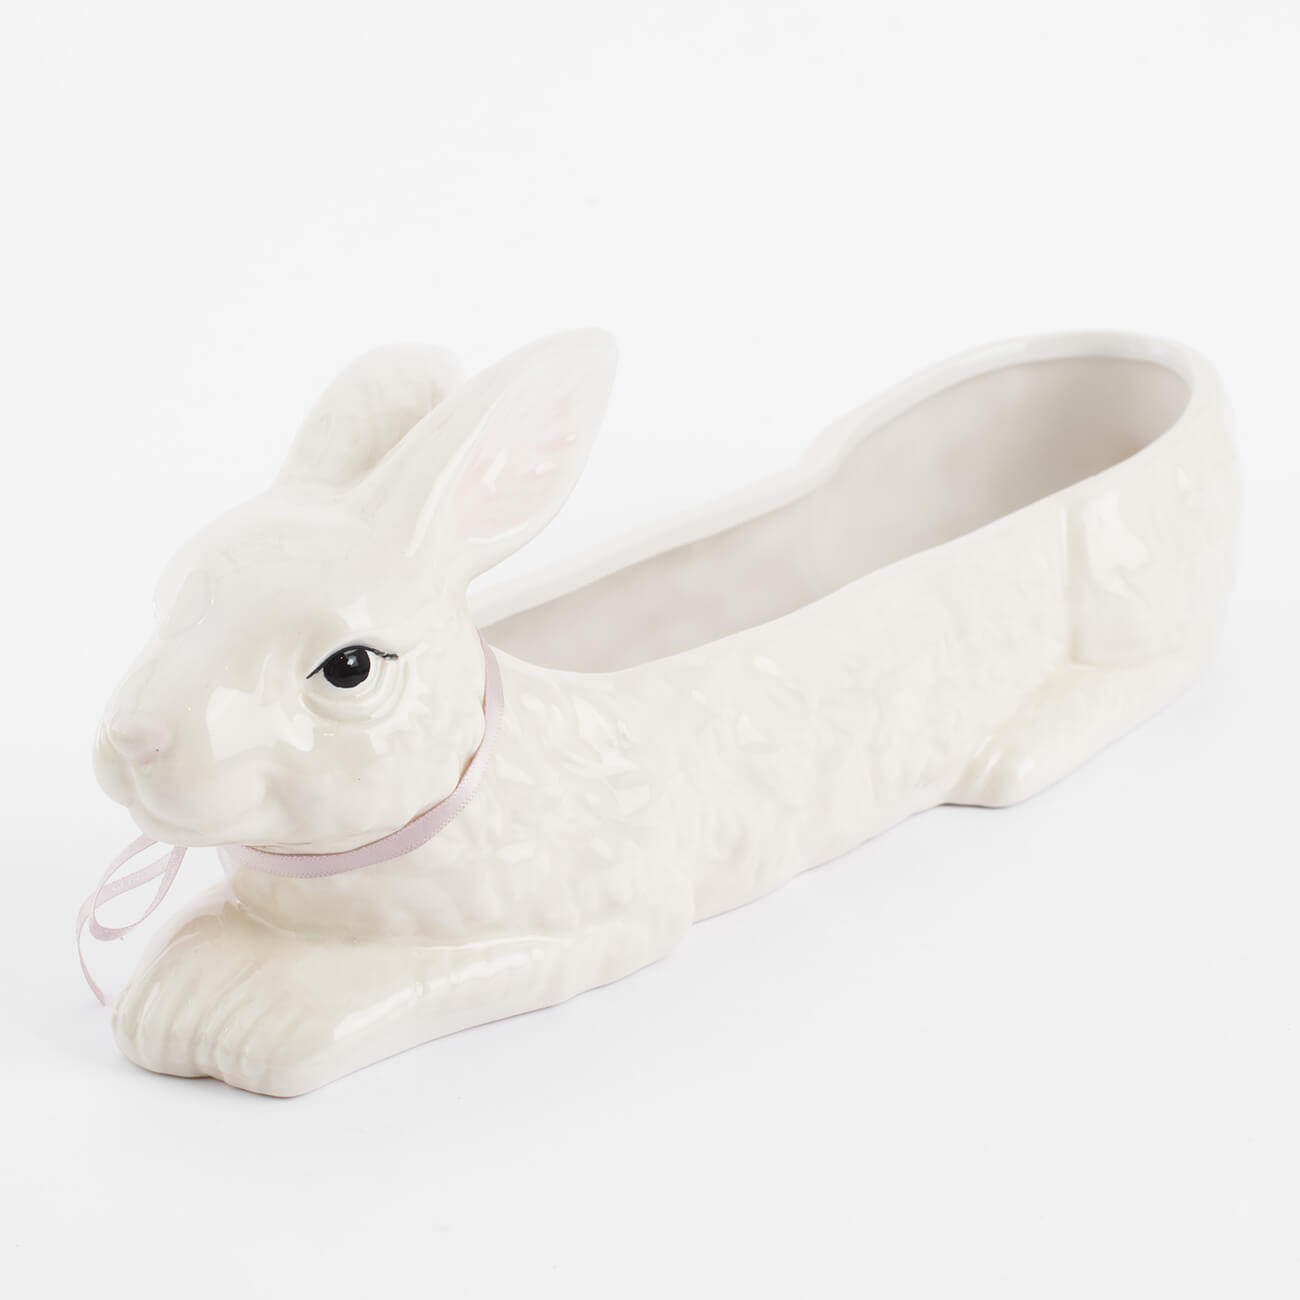 конфетница 18x13 см керамика перламутр кролик с корзиной в ах easter Конфетница, 34х12 см, керамика, молочная, Кролик, Natural easter